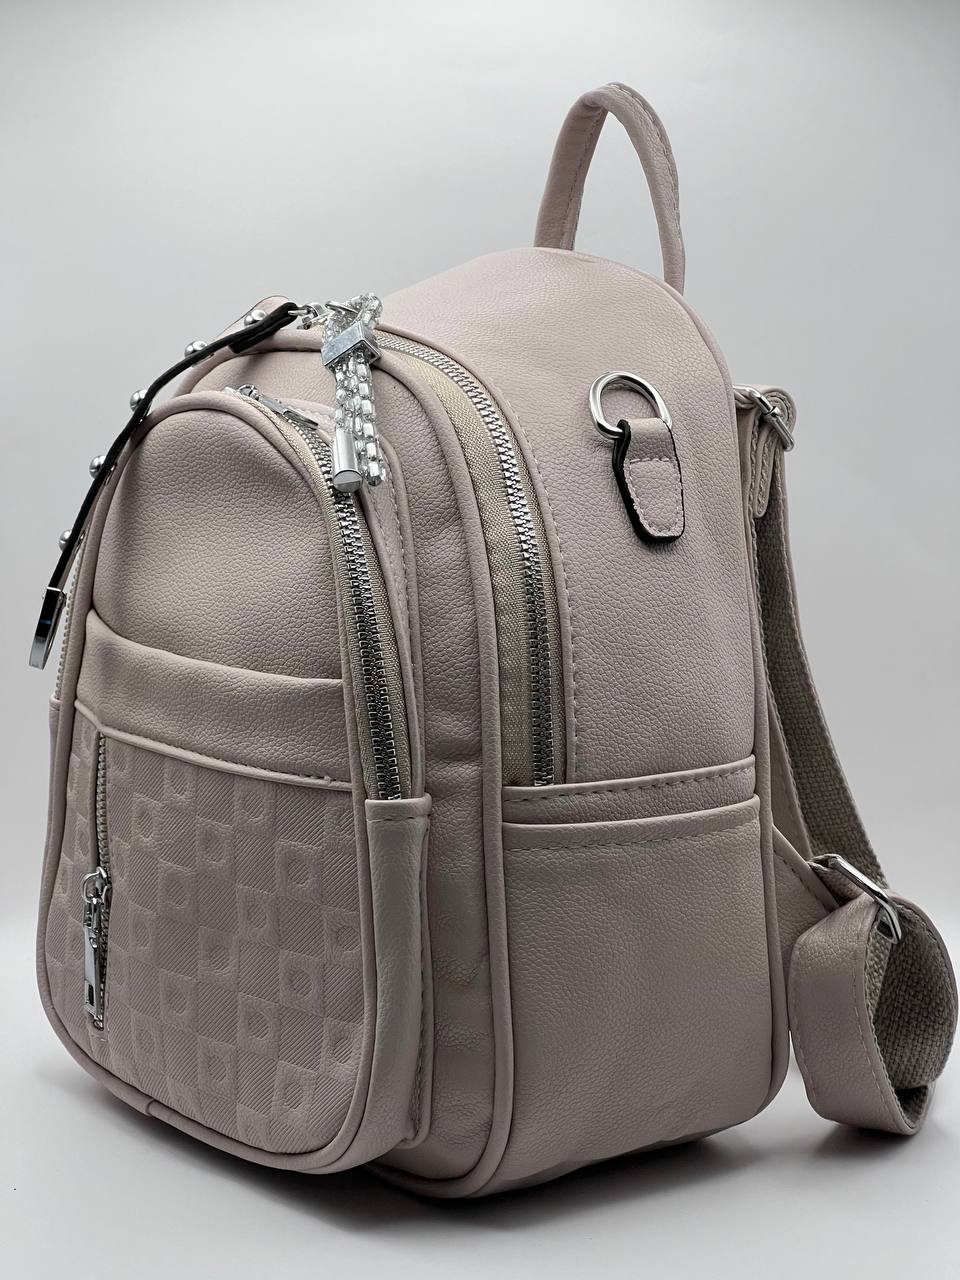 Сумка-рюкзак женская SunGold Р-59605 розовато-серая, 27х22х12 см